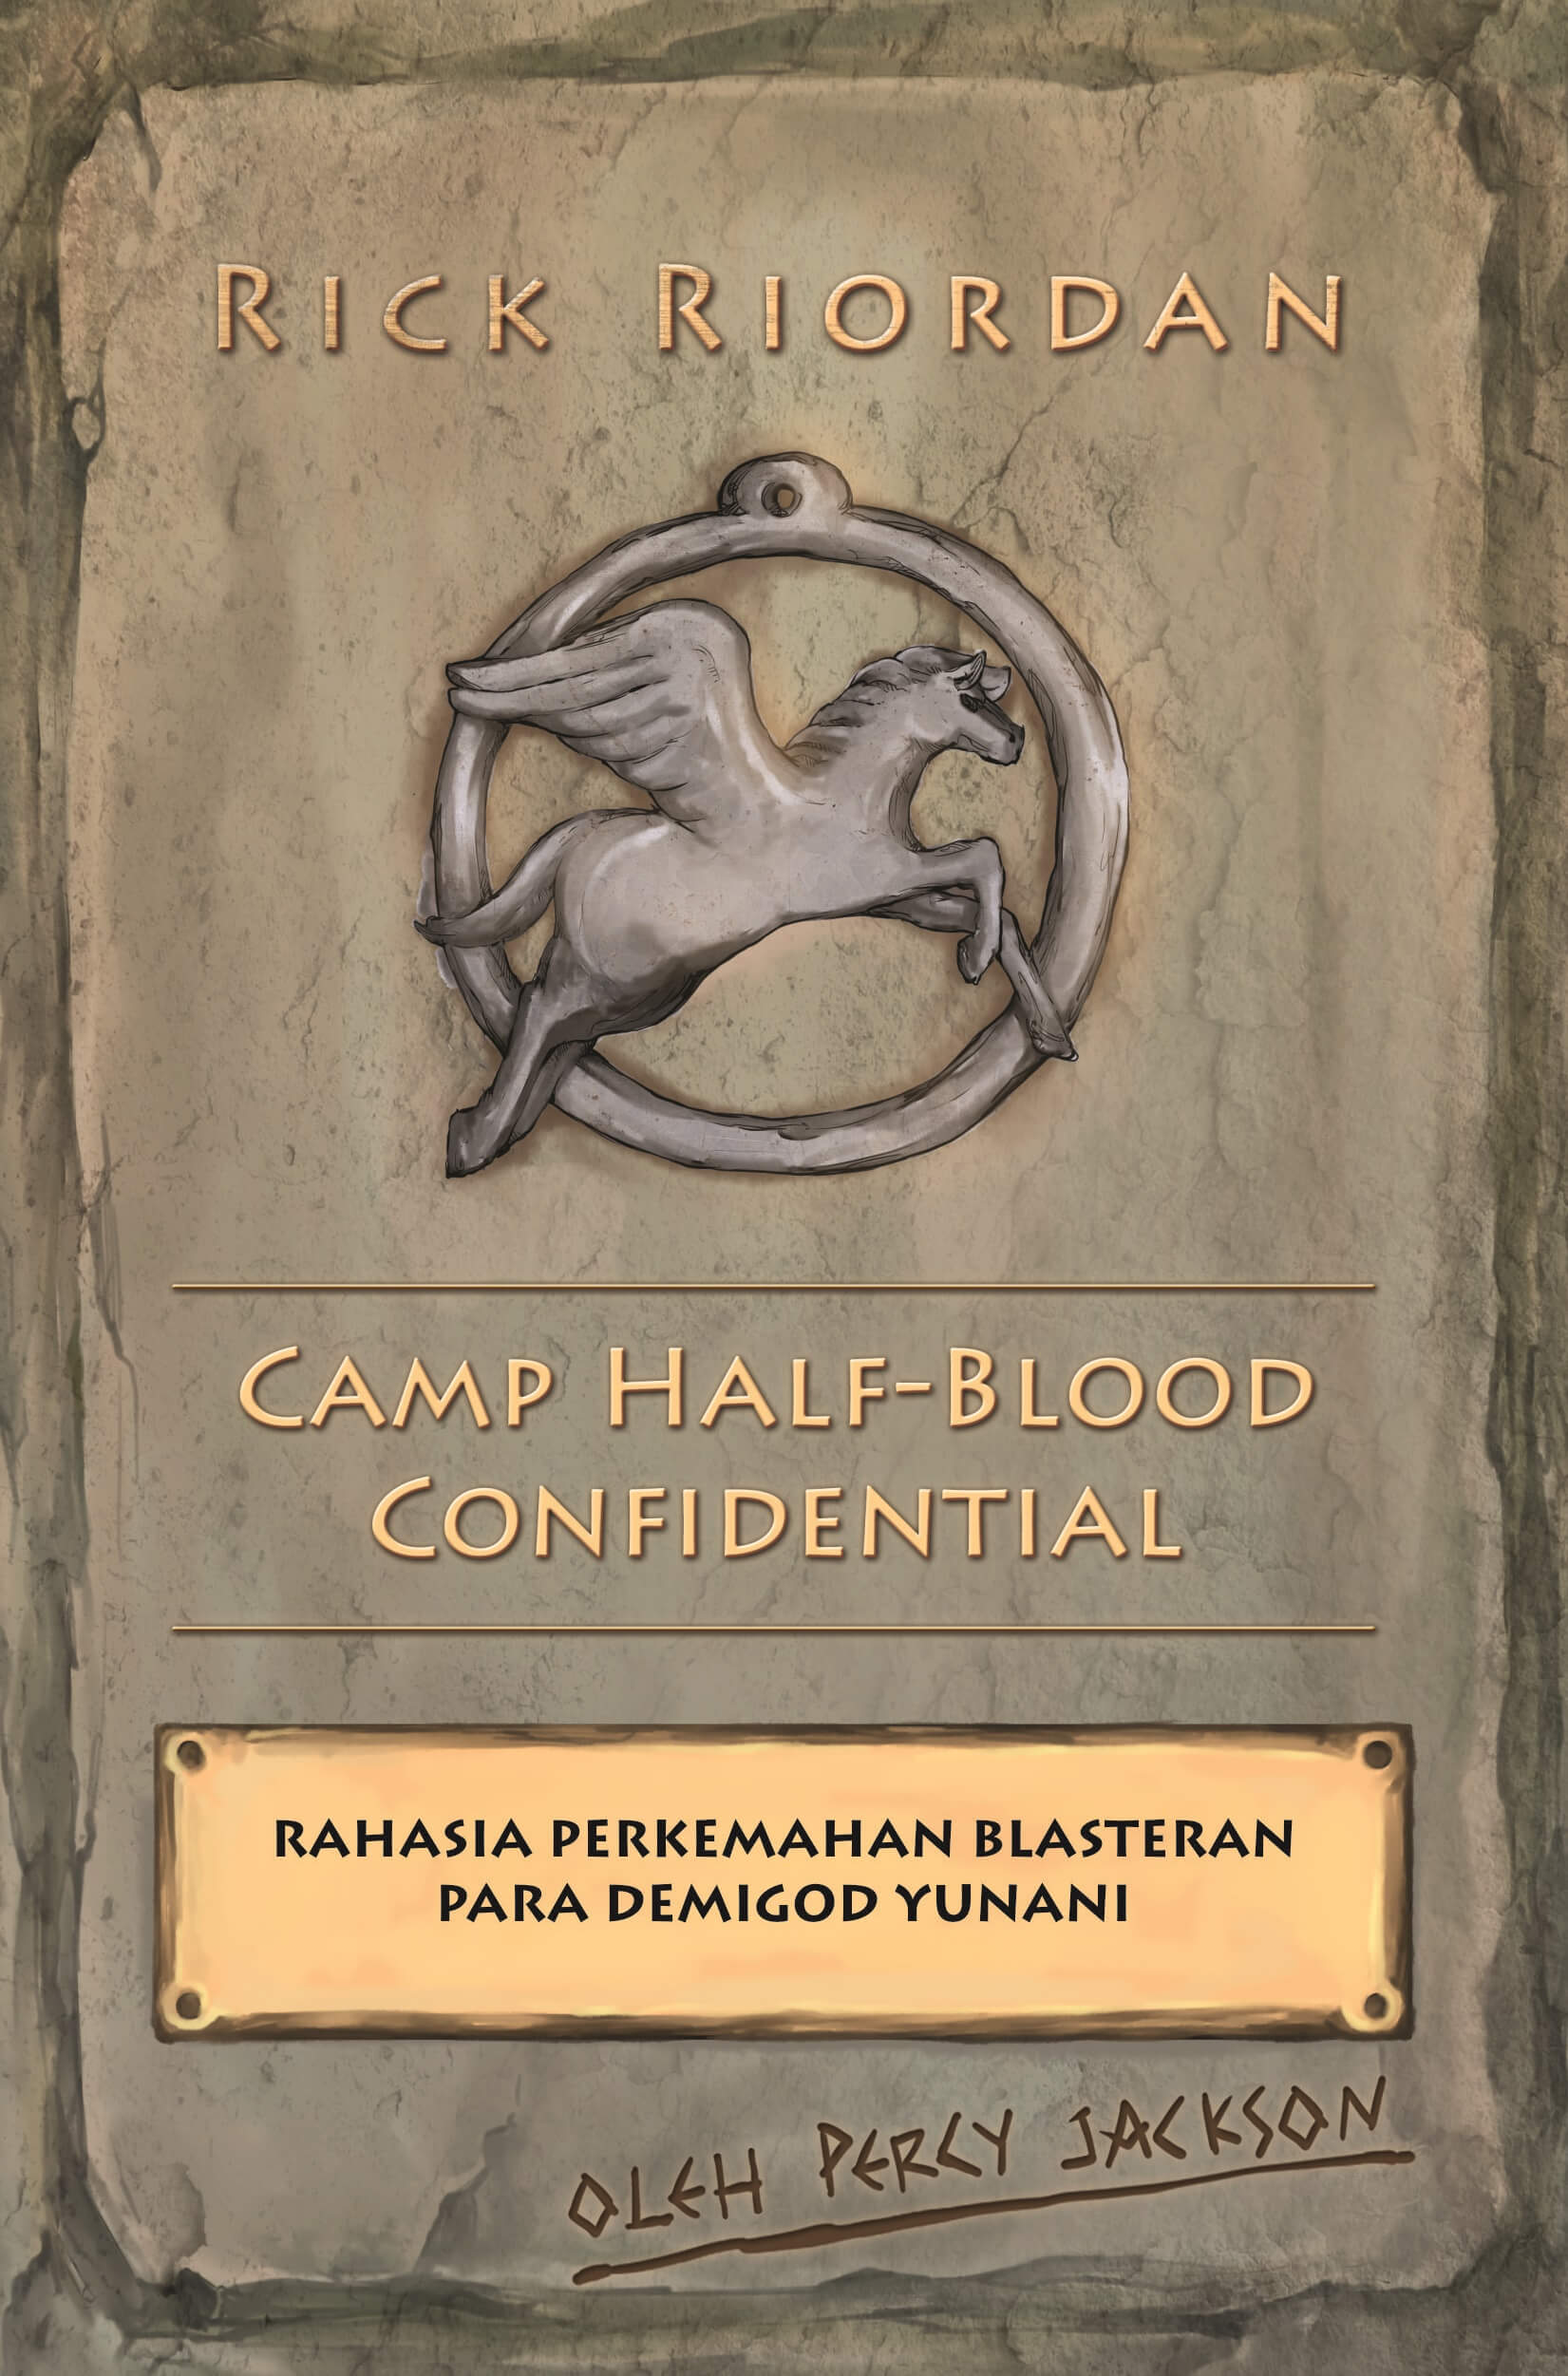 CAMP HALF-BLOOD CONFIDENTIAL